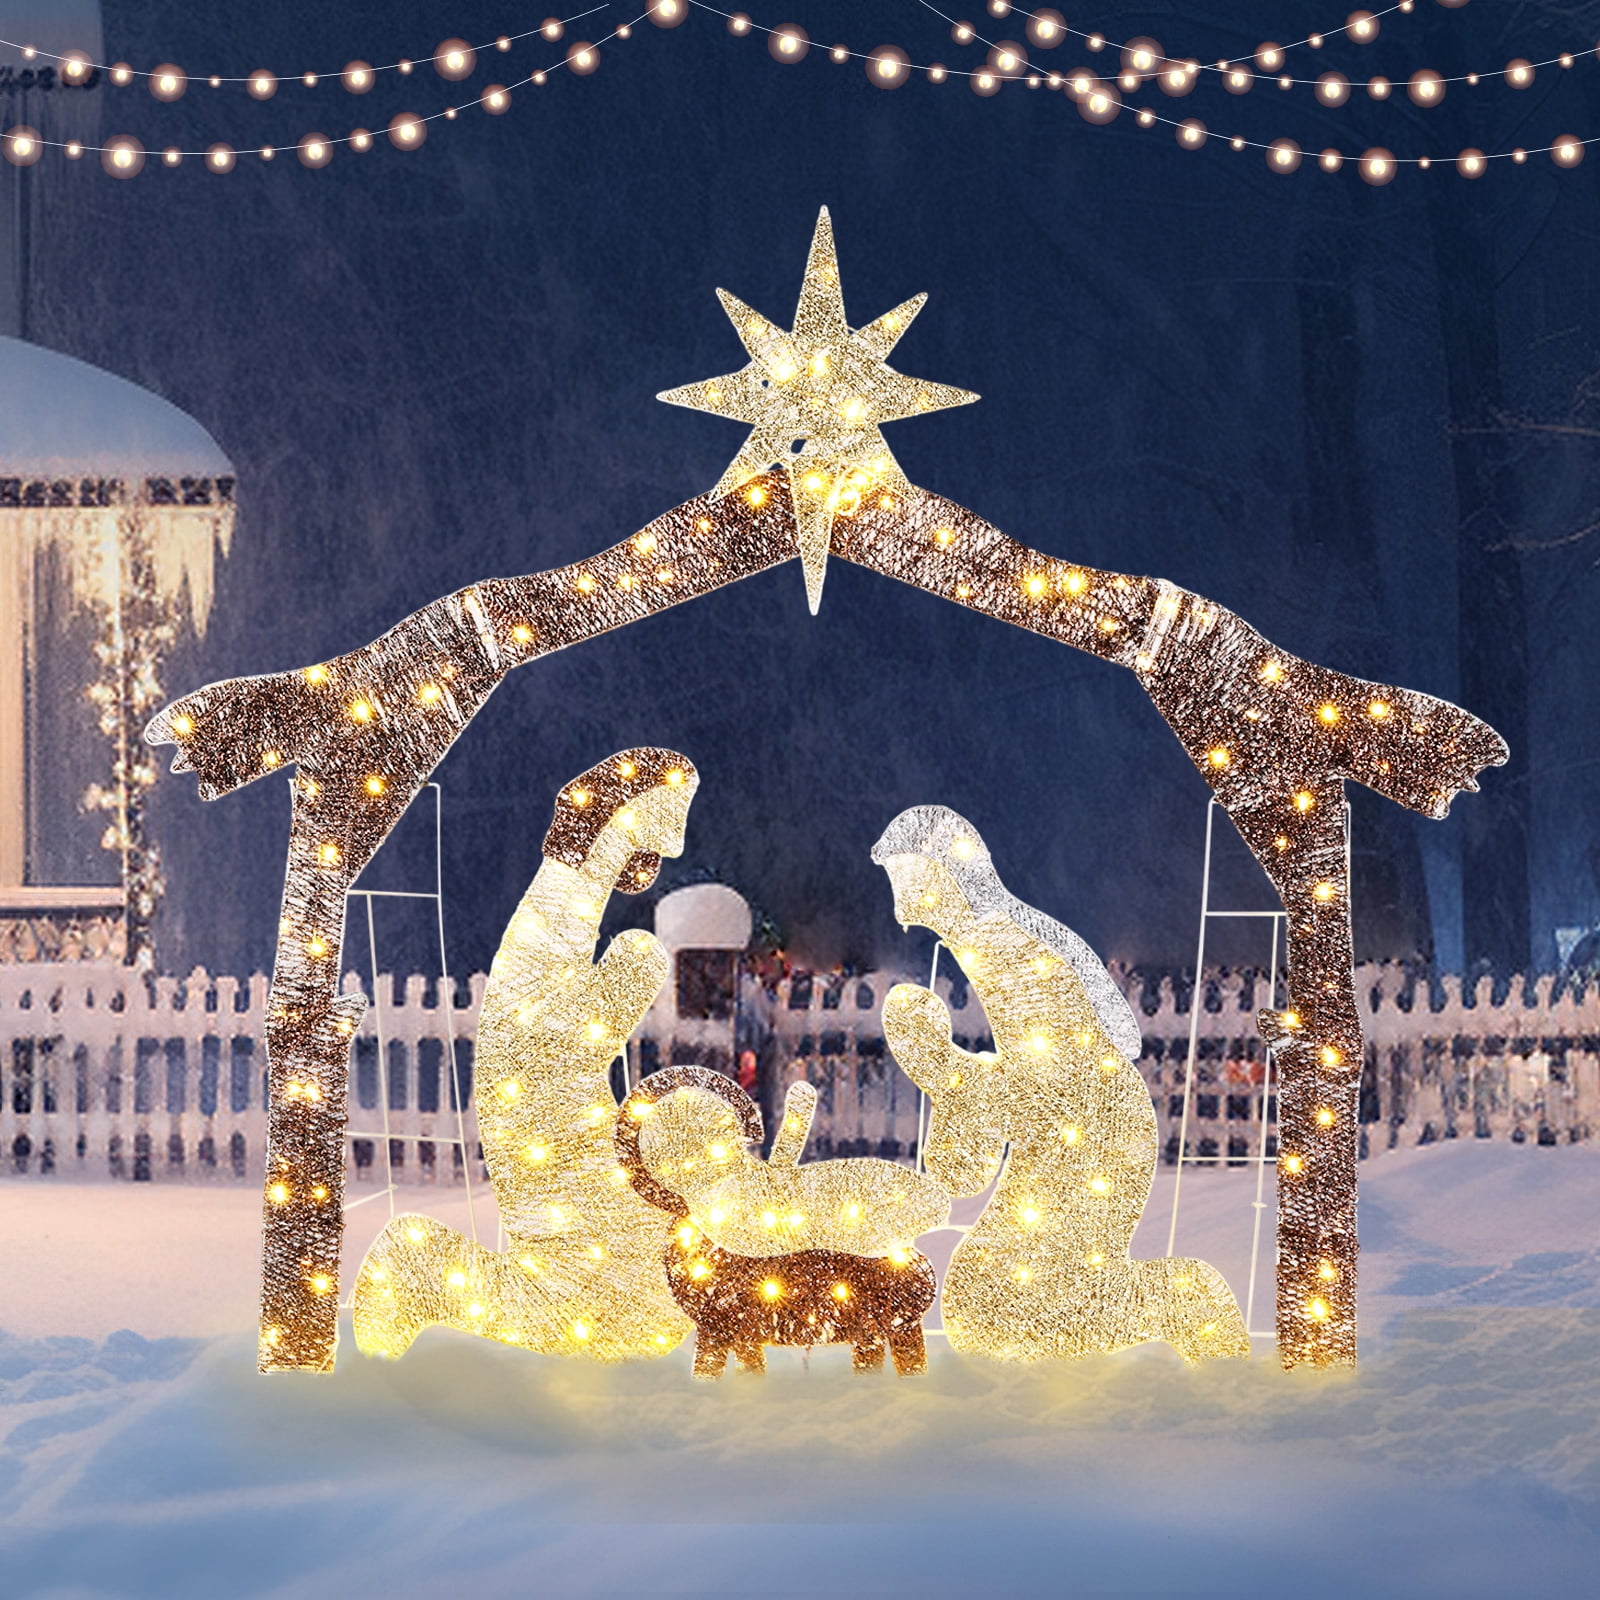 Zimtown 6ft Outdoor Nativity Scene Christmas Lighted Nativity Jesus ...